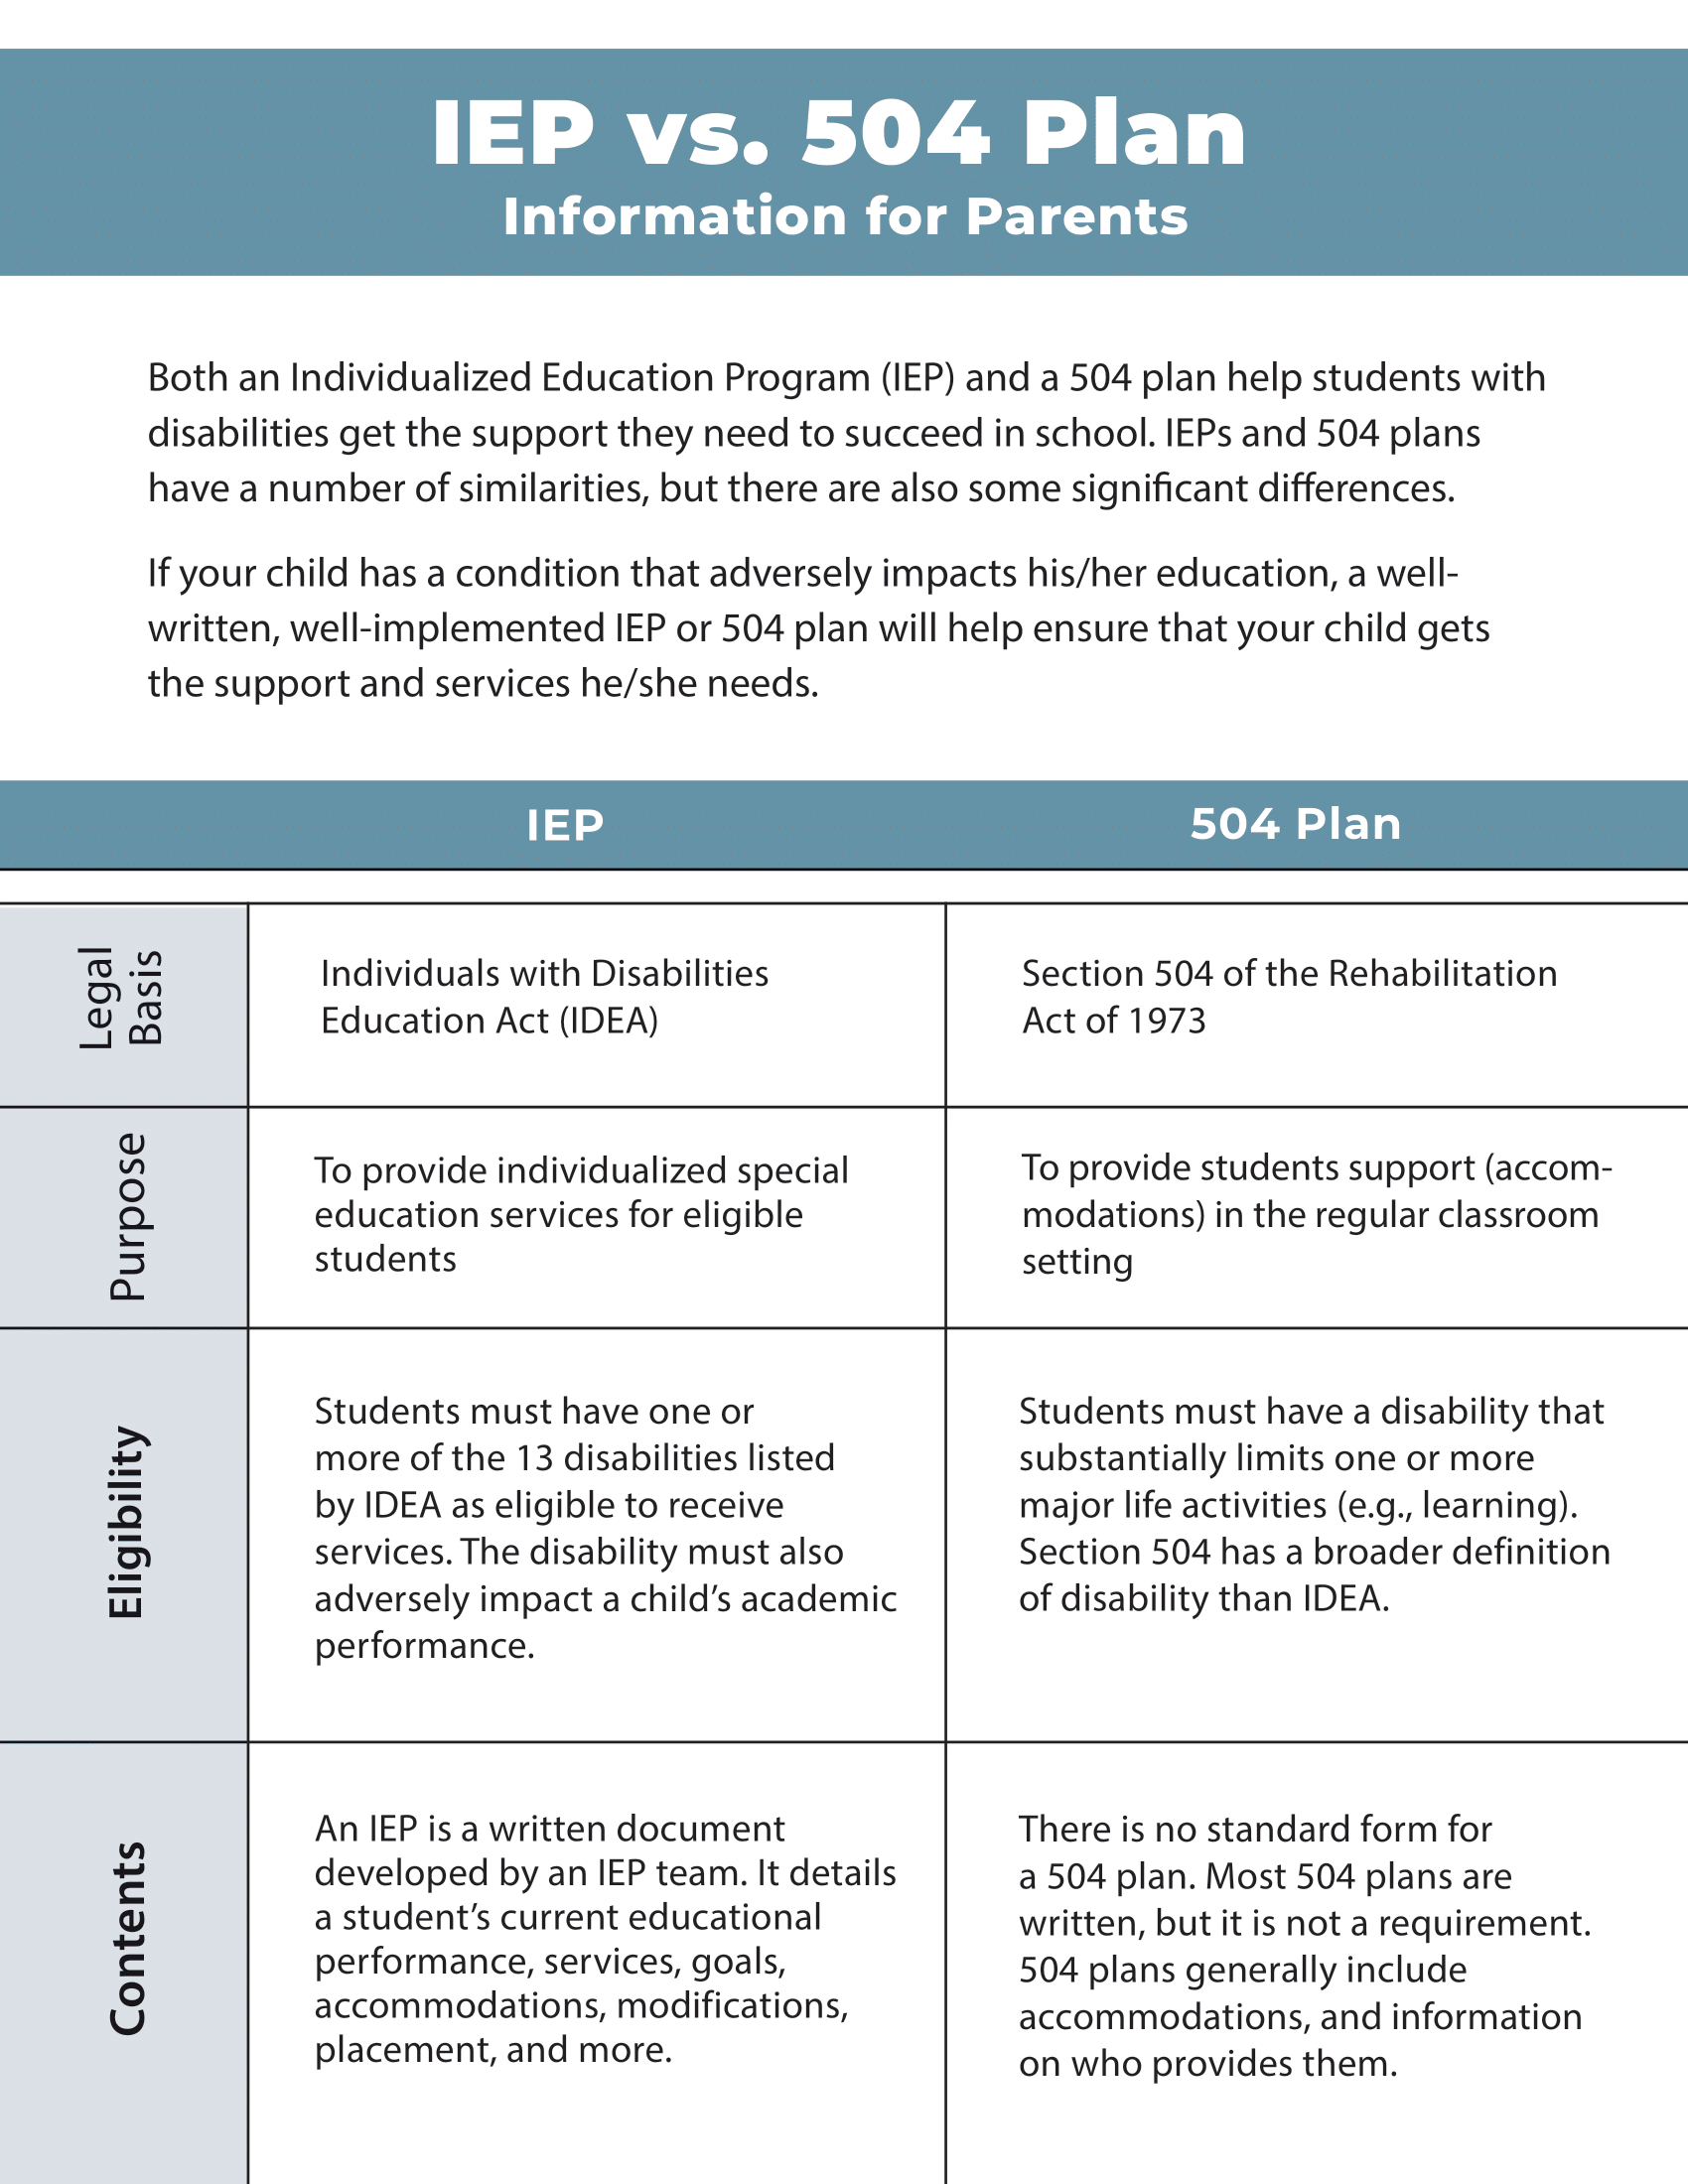 IEP vs. 504 Plan - Information for Parents